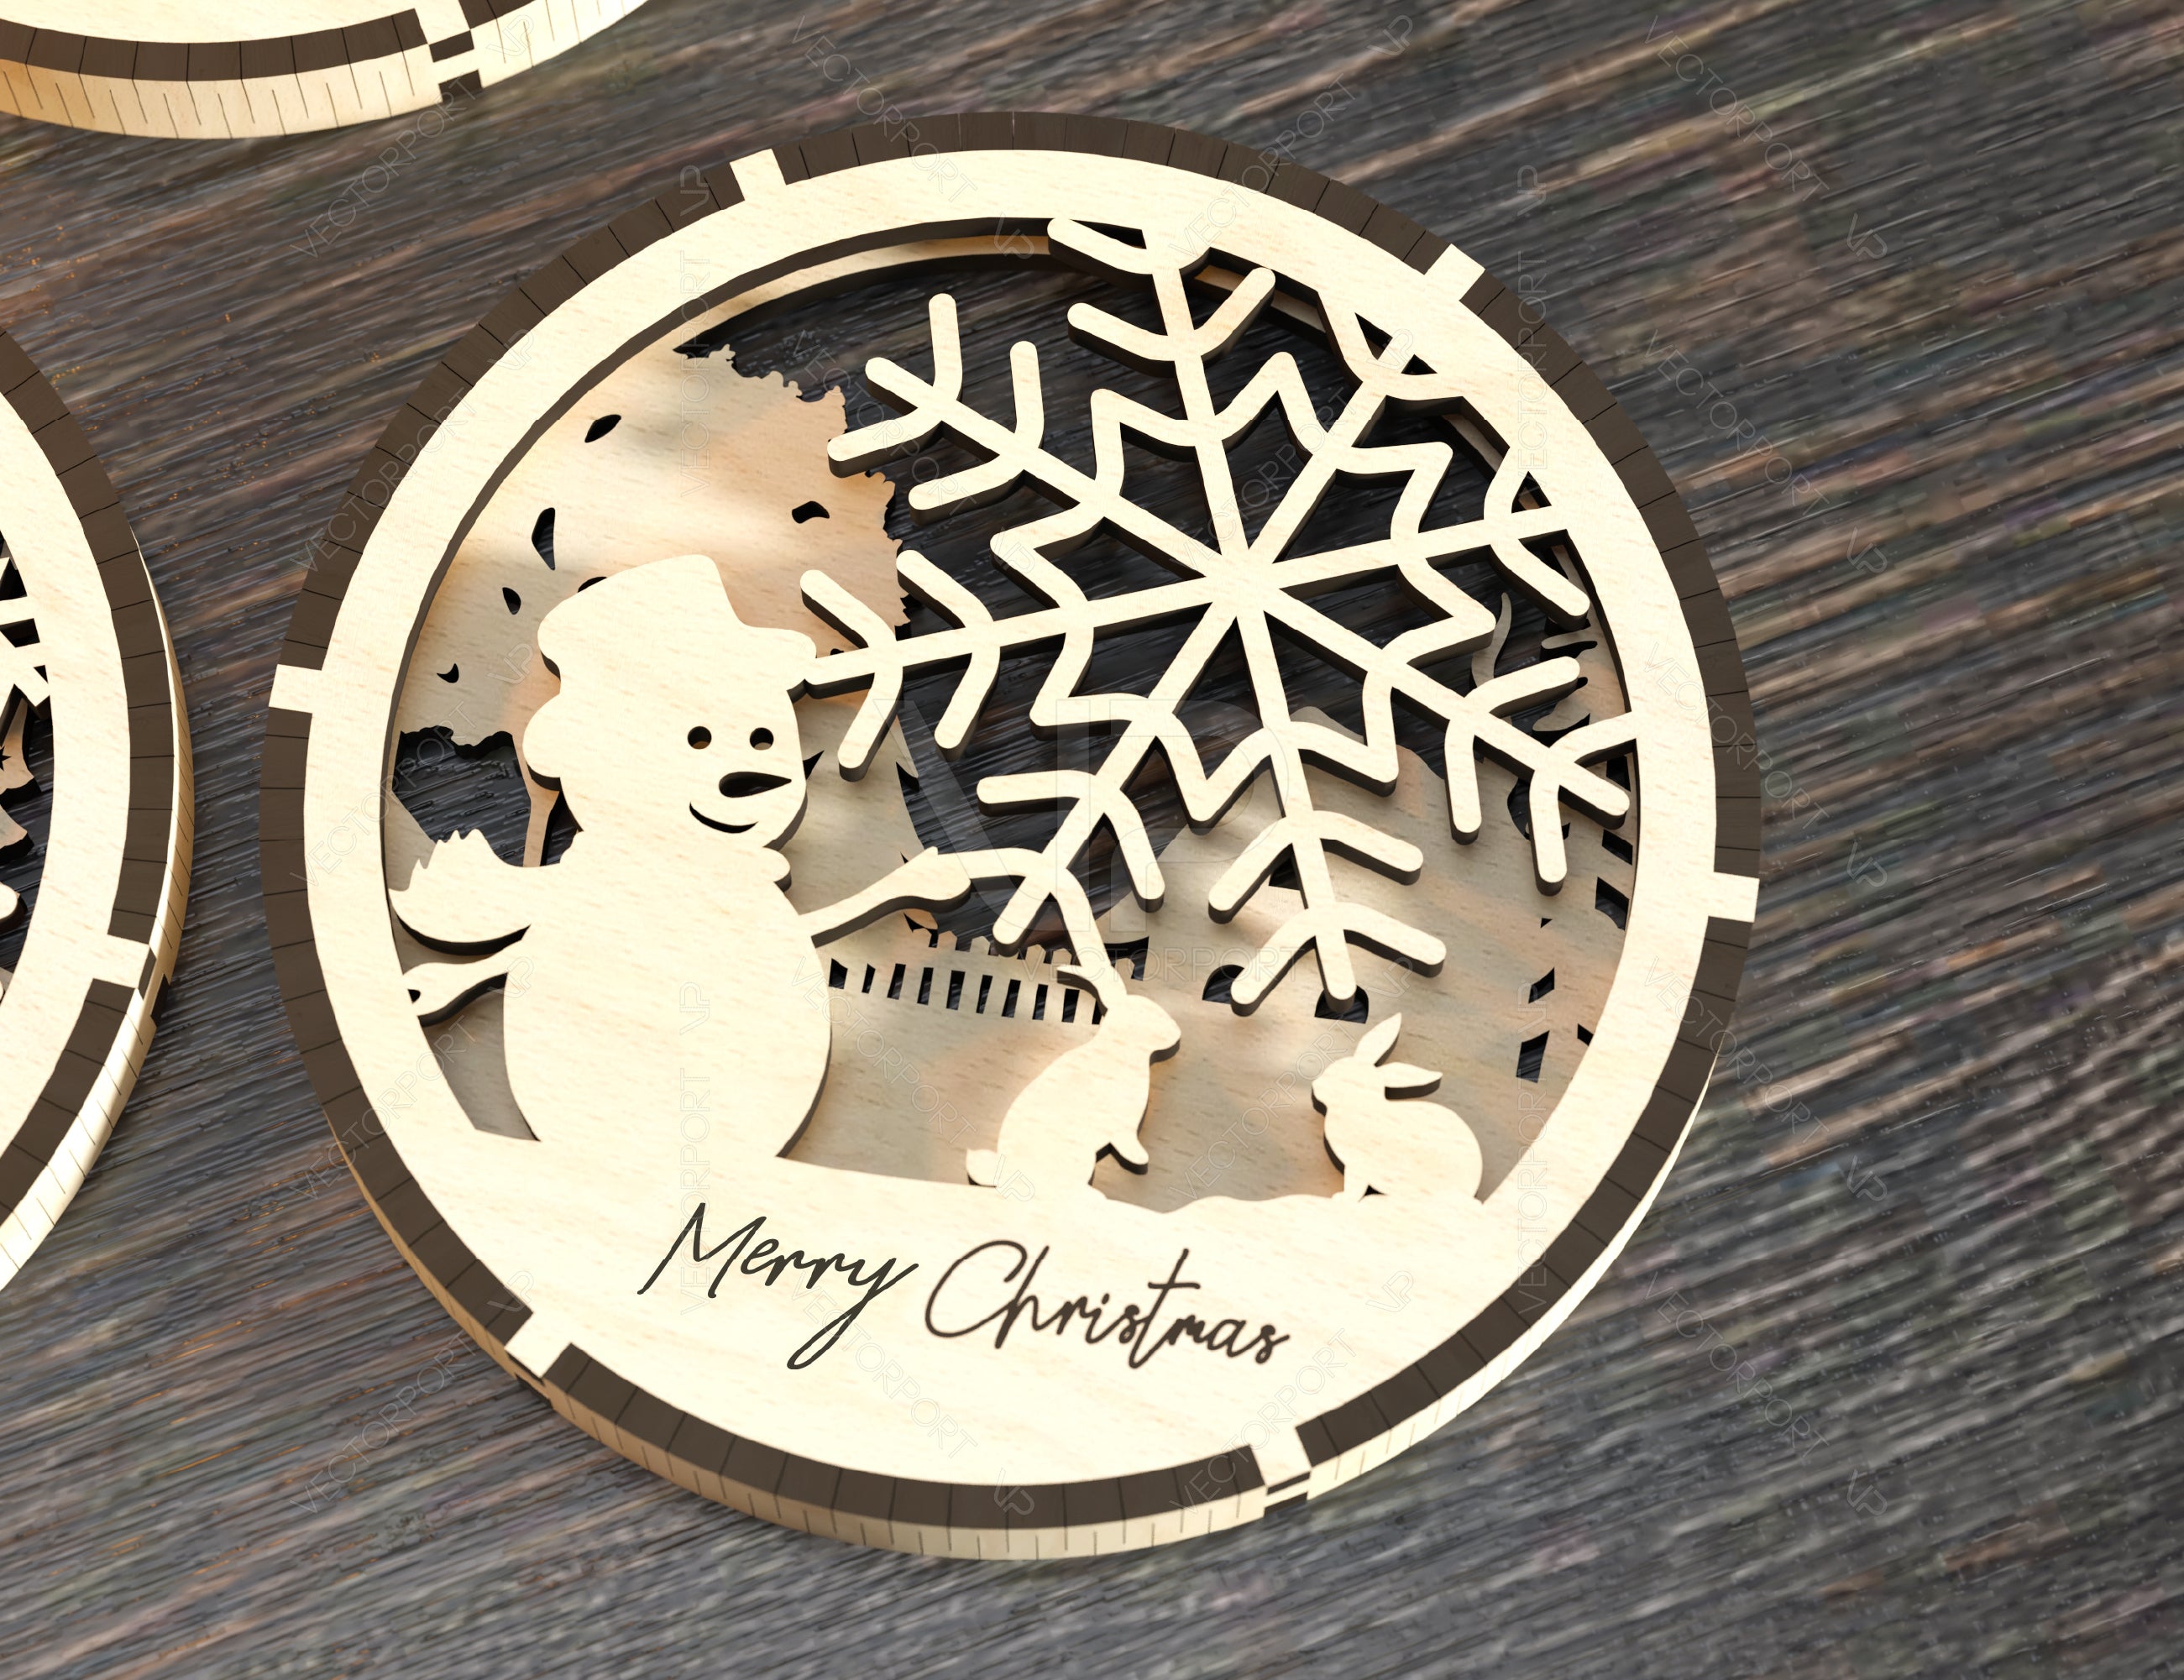 Coaster Christmas Gift Laser Cut Tea Coffee Cup Mat Pad Placemat Tableware Deer New Year Theme Digital Download |#U264|